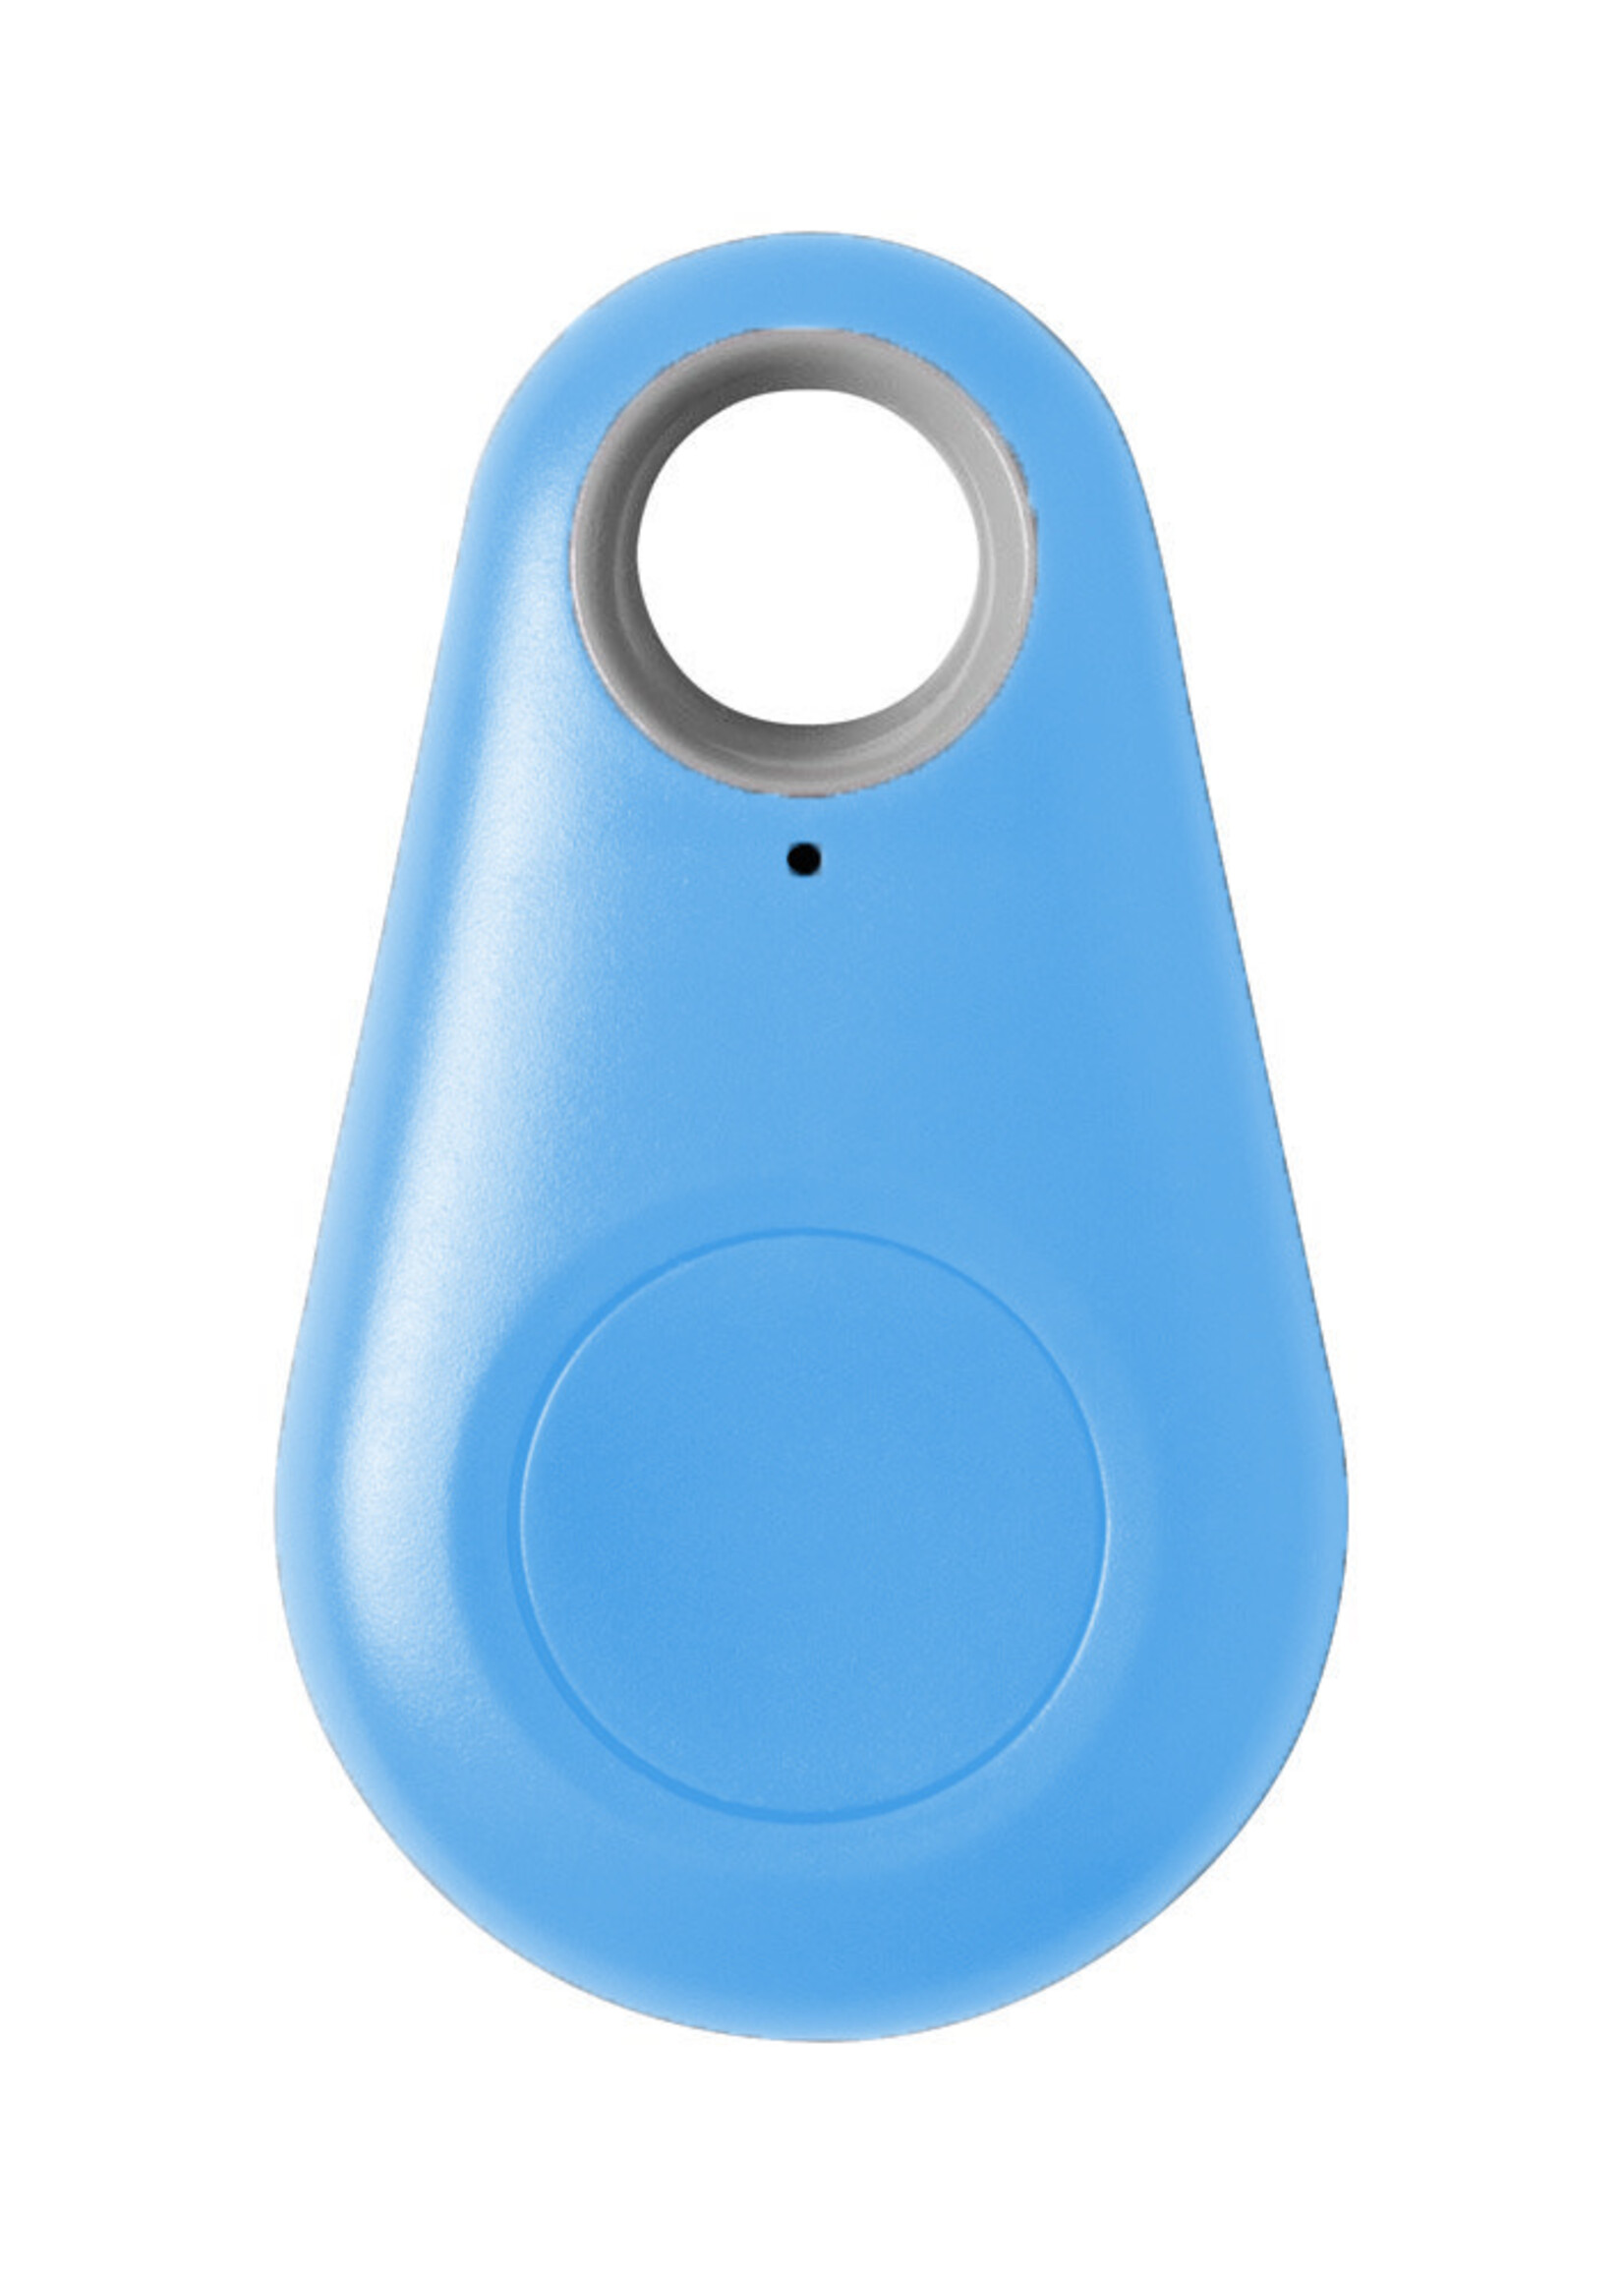 BTH Keyfinder Sleutelvinder Sleutelzoeker Sleutelhanger Keyfinder Bluetooth Sleutels Huisdier - Blauw